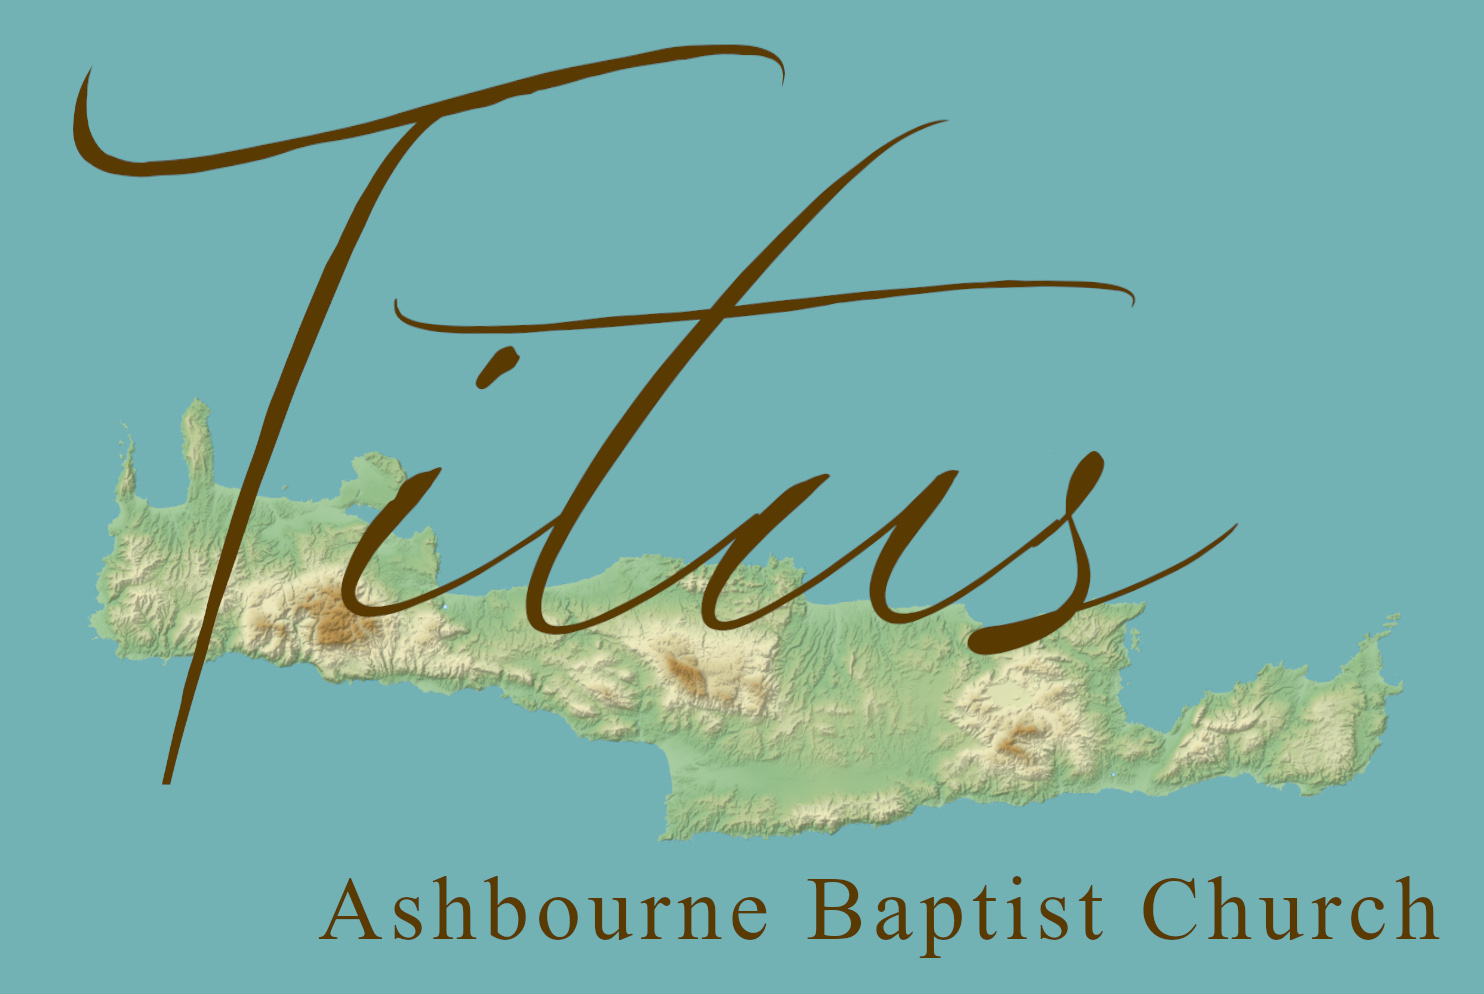 Titus - sermon series by Nathan Clarke